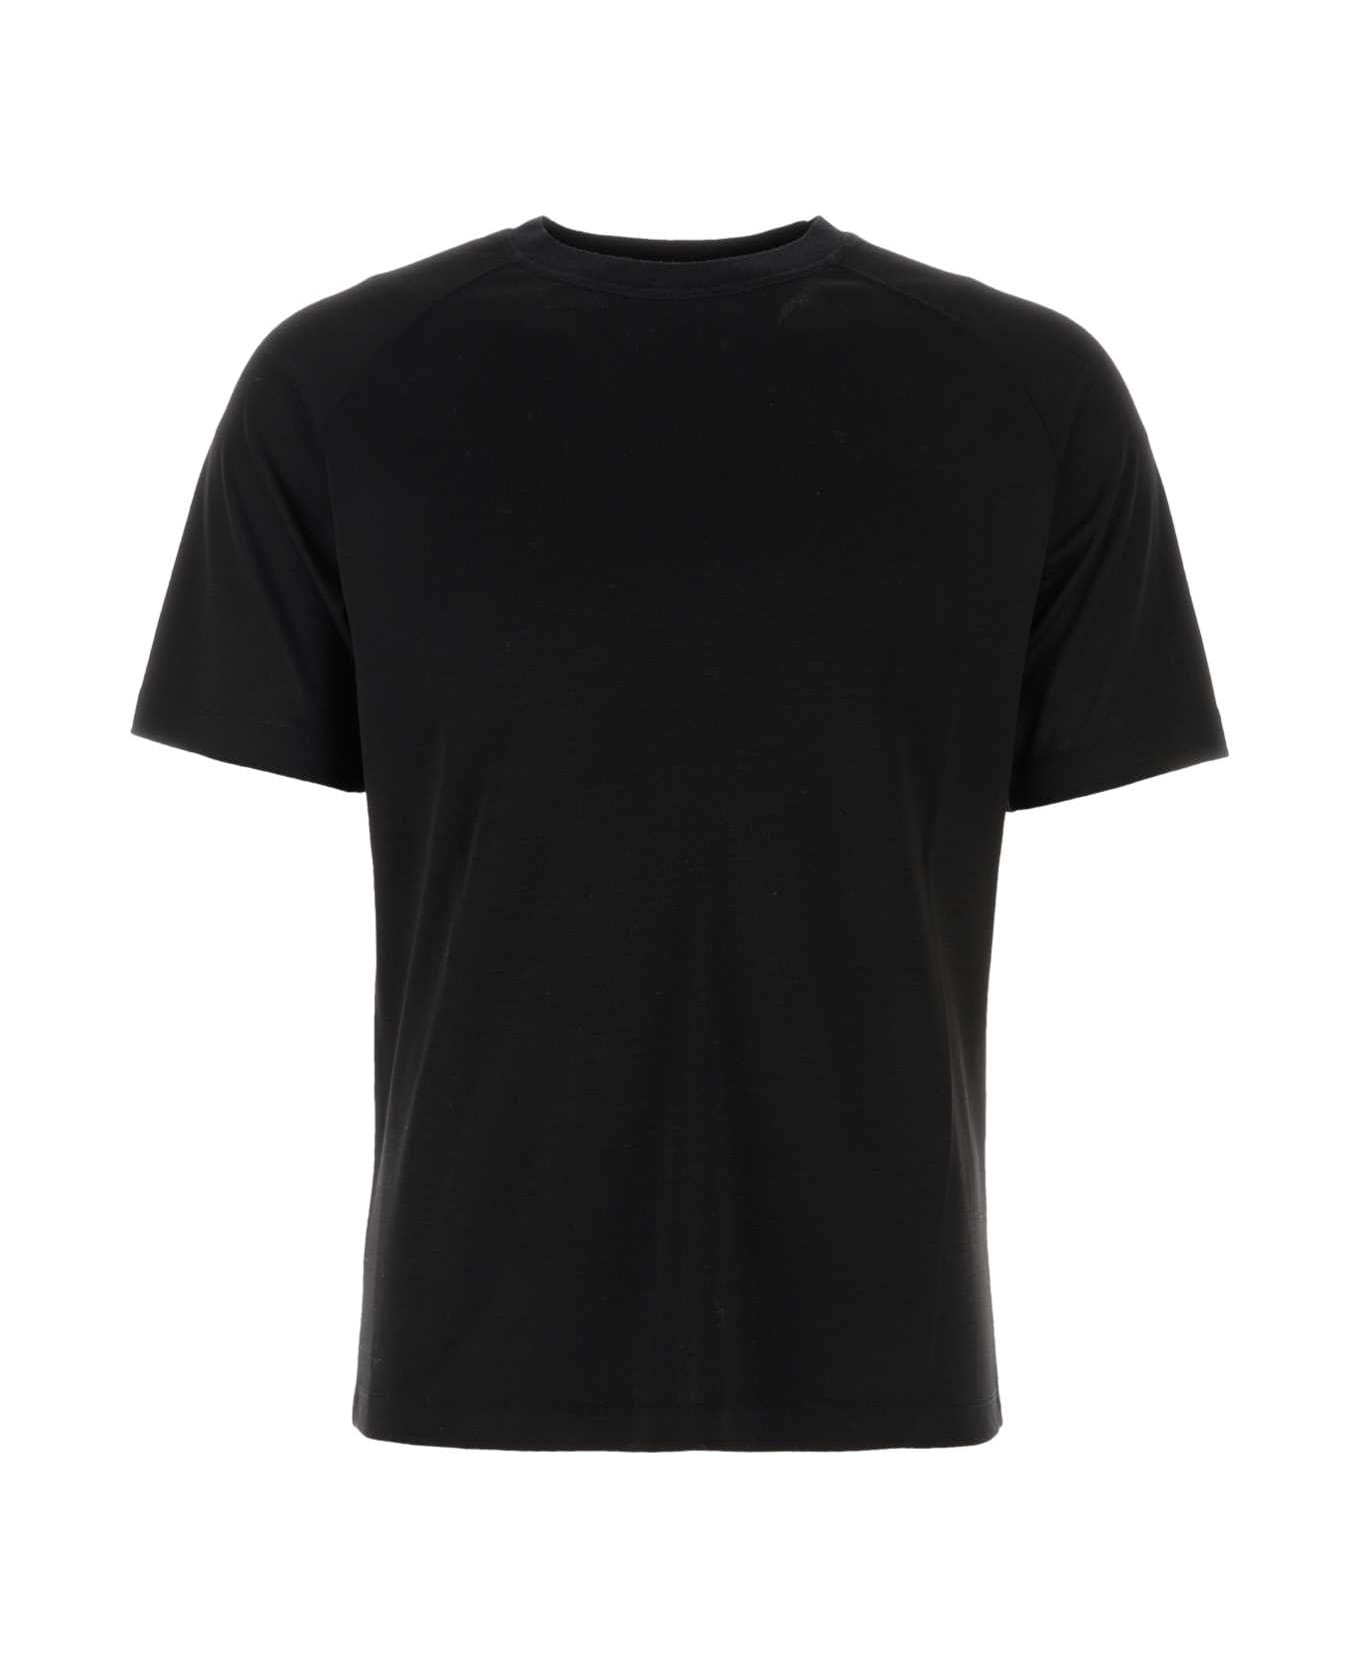 Zegna Black Wool T-shirt - K09